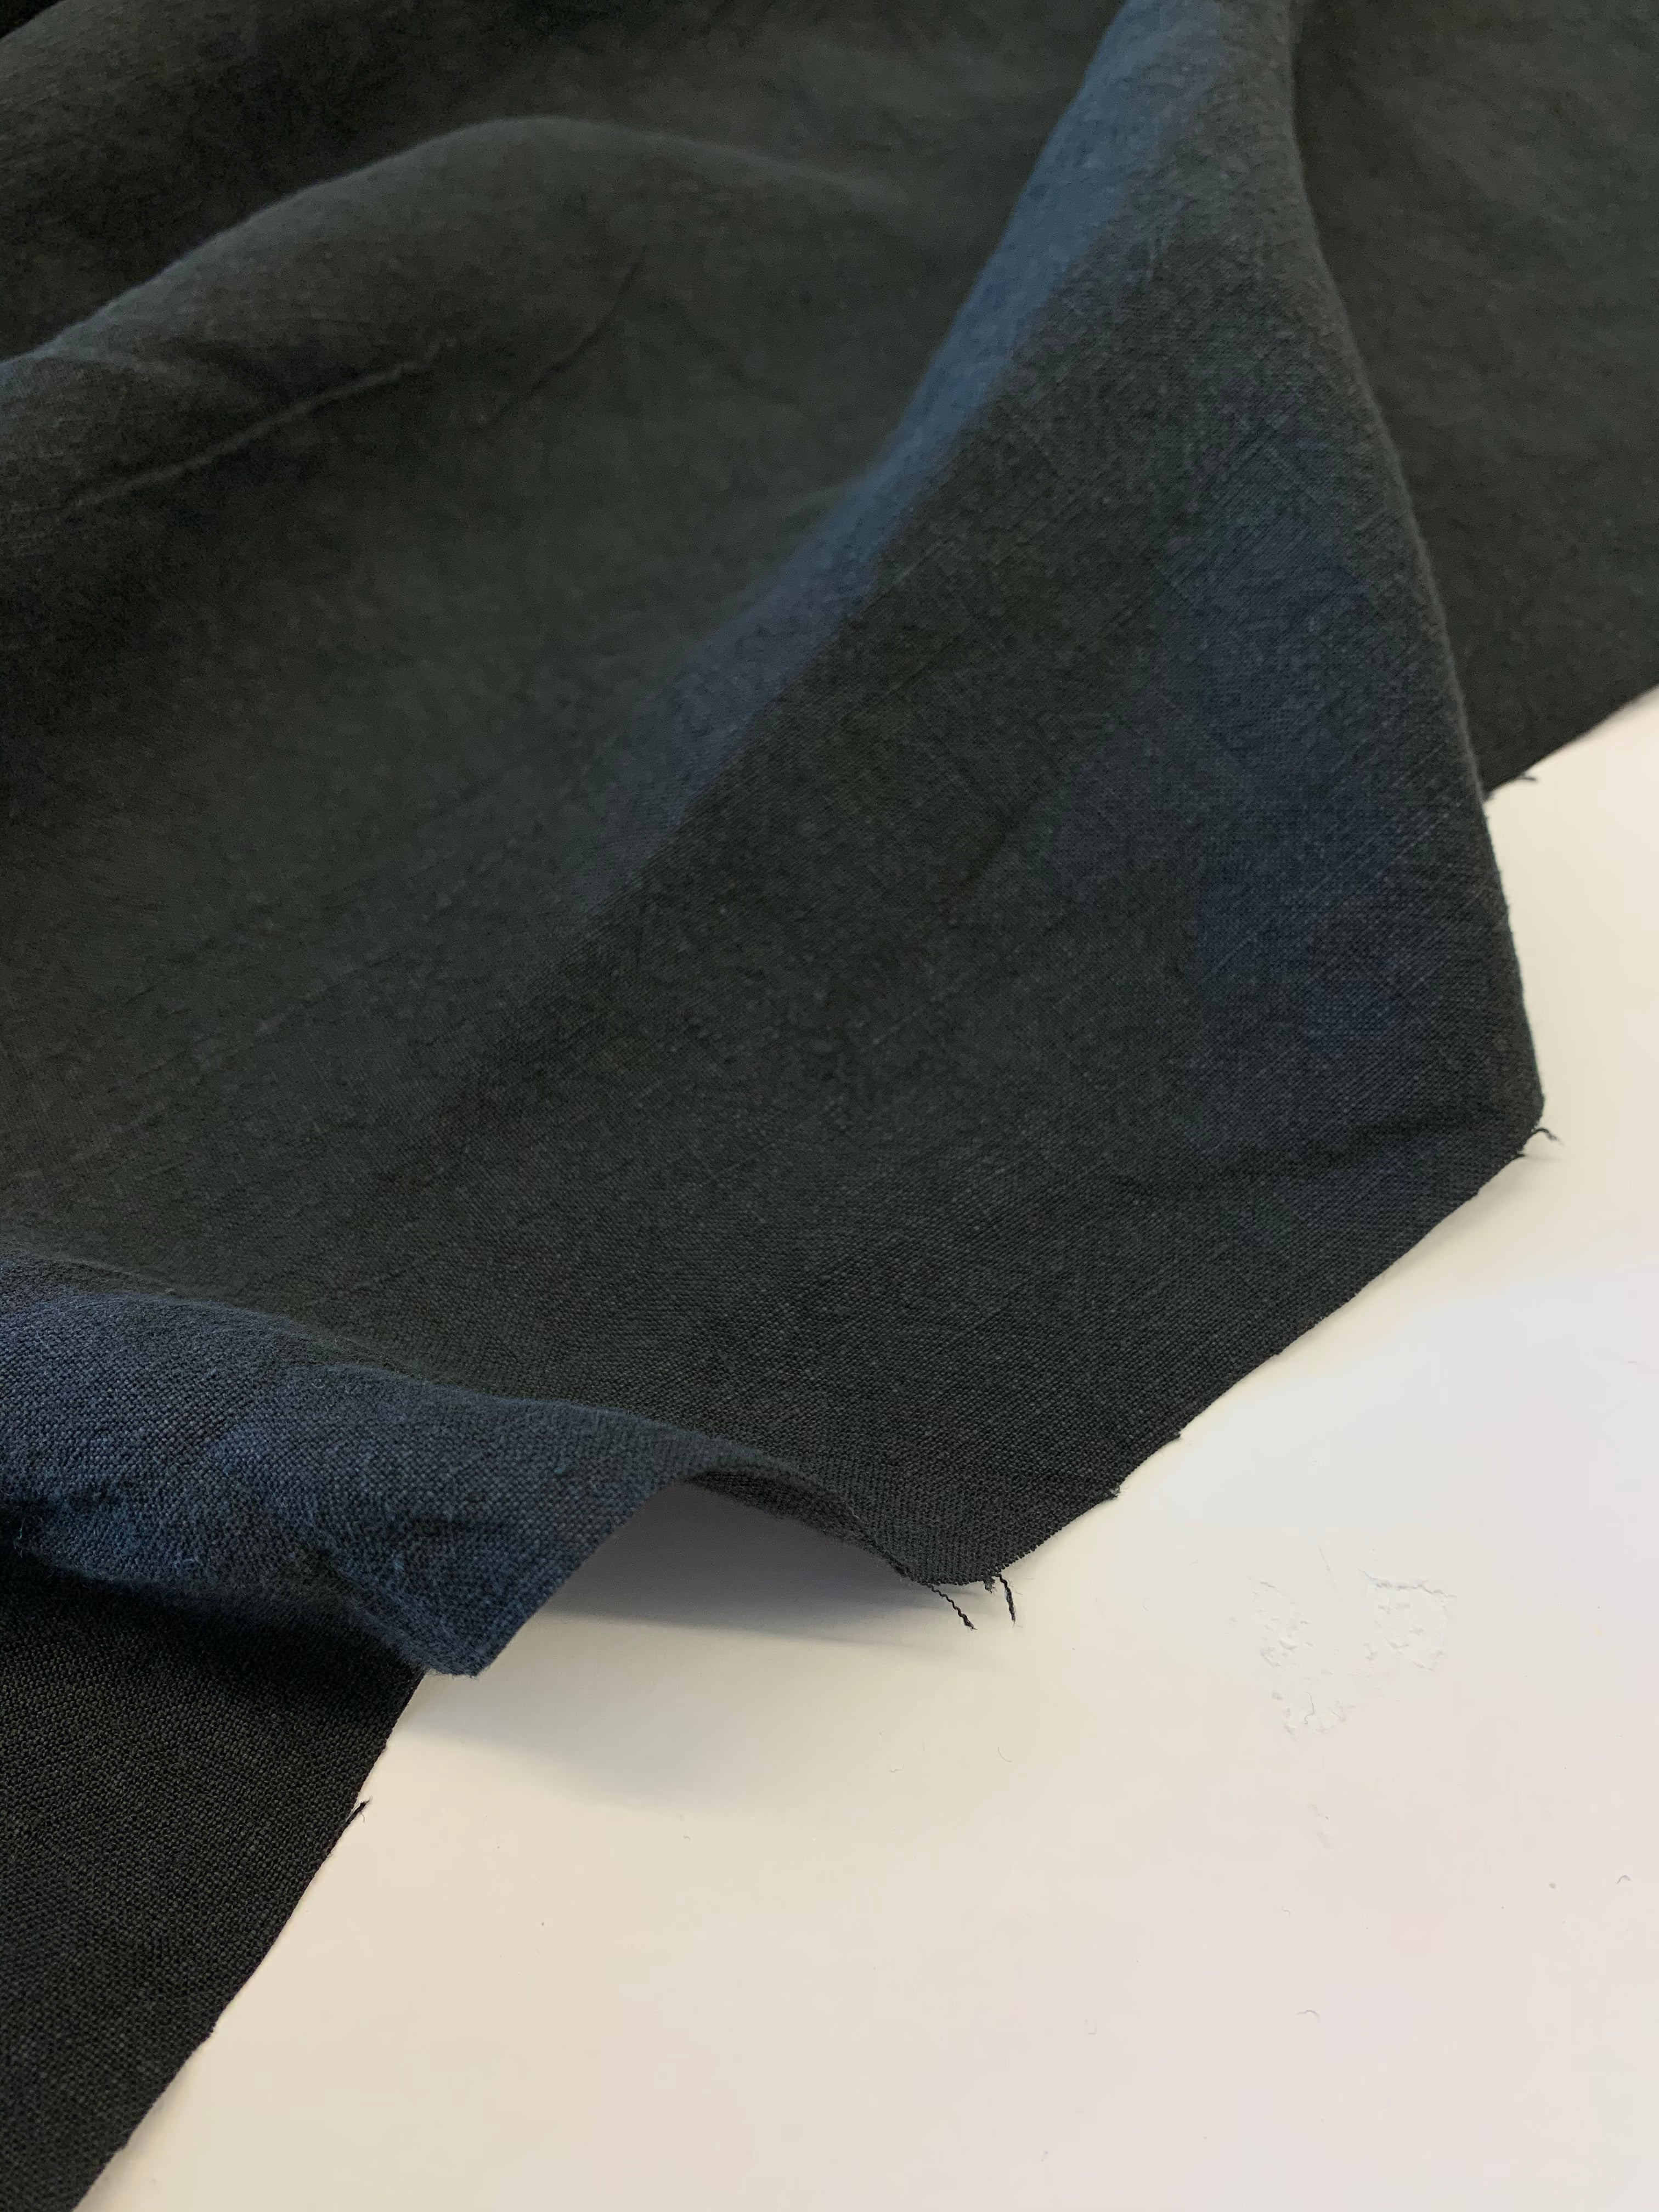 Antique Wash Linen in Black